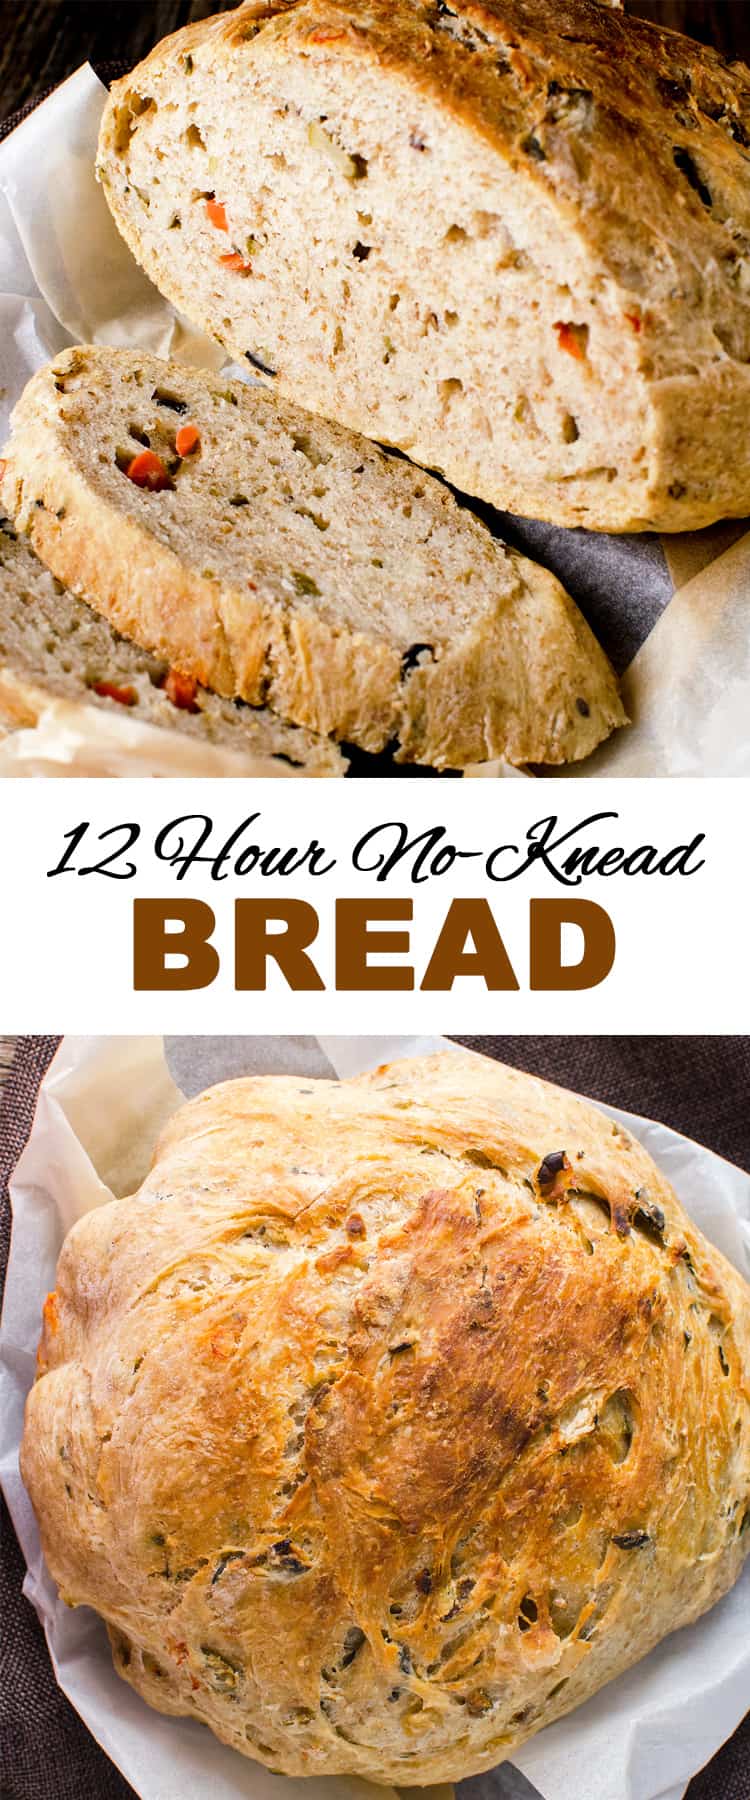 simple to make 12 hour no knead bread recipe